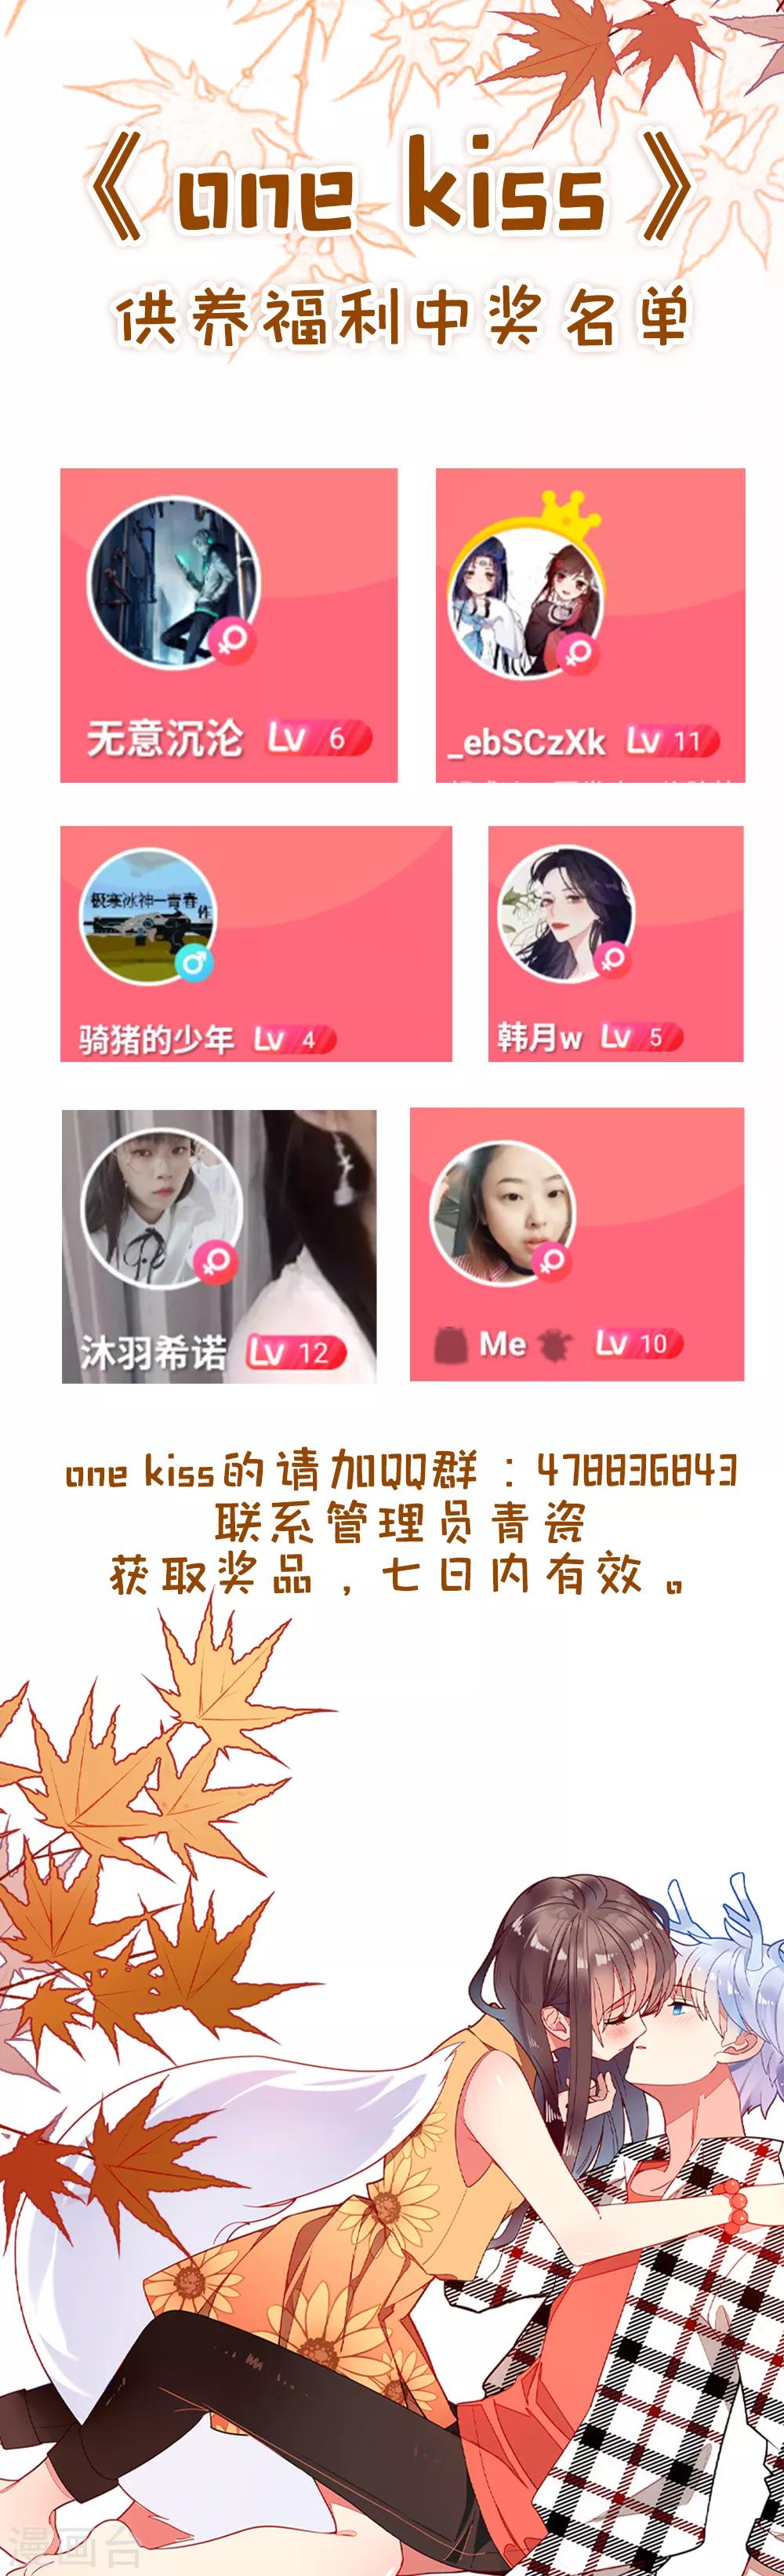 One Kiss A Day - 12月2日供養中獎名單 - 1